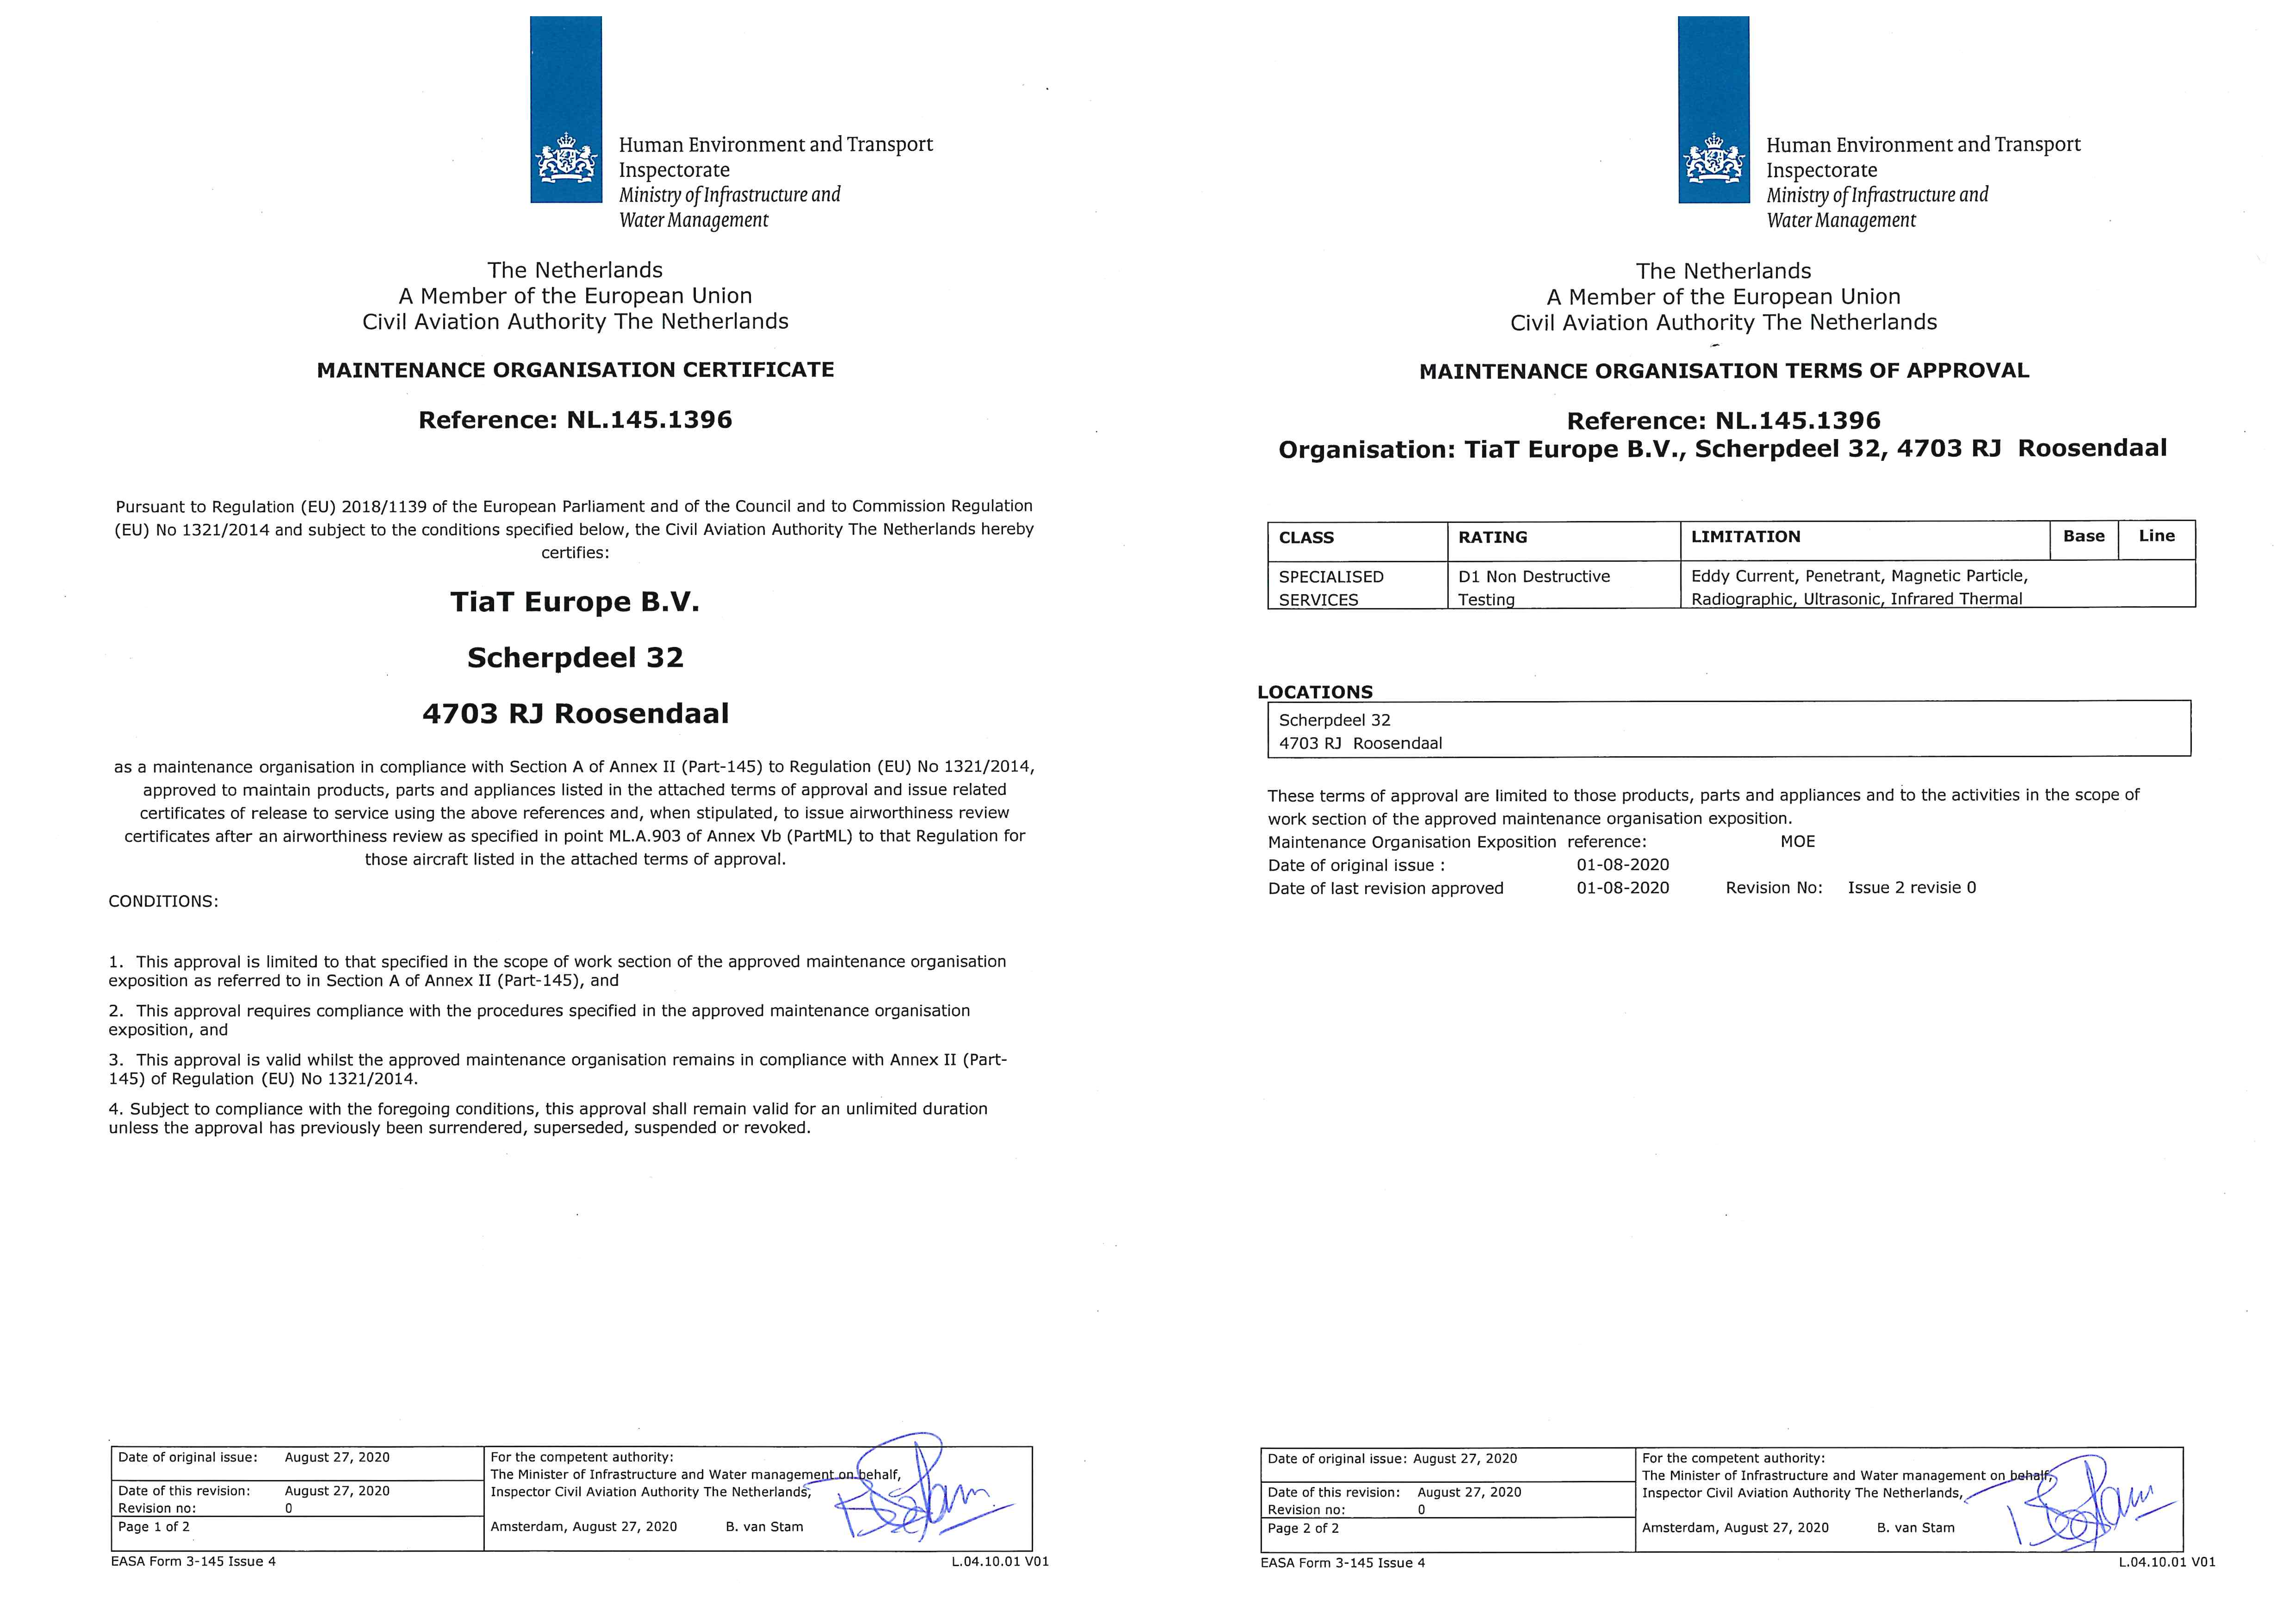 Part 145 Maintenance Organization Certificate - D1 Non Destructive Testing (no: NL.145.1396)